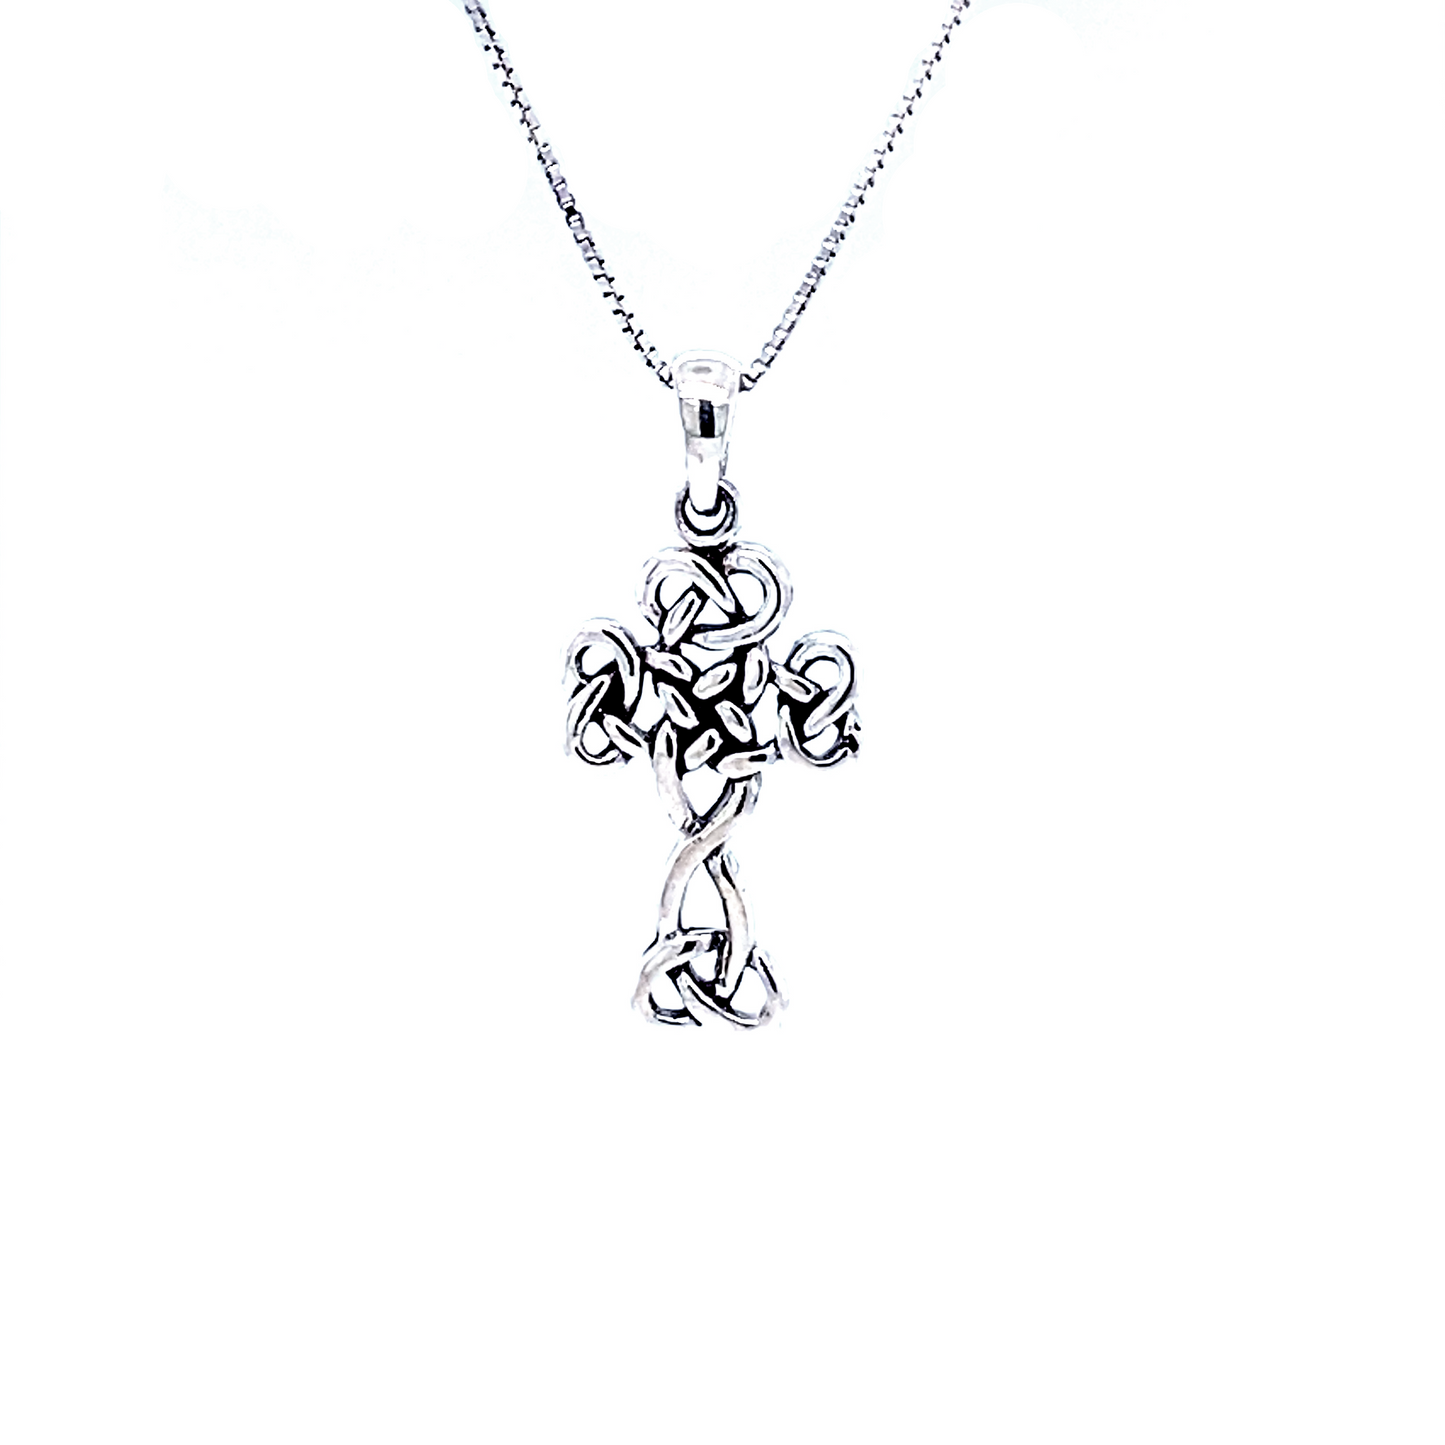 A dainty sterling silver Celtic Knot Cross Pendant.